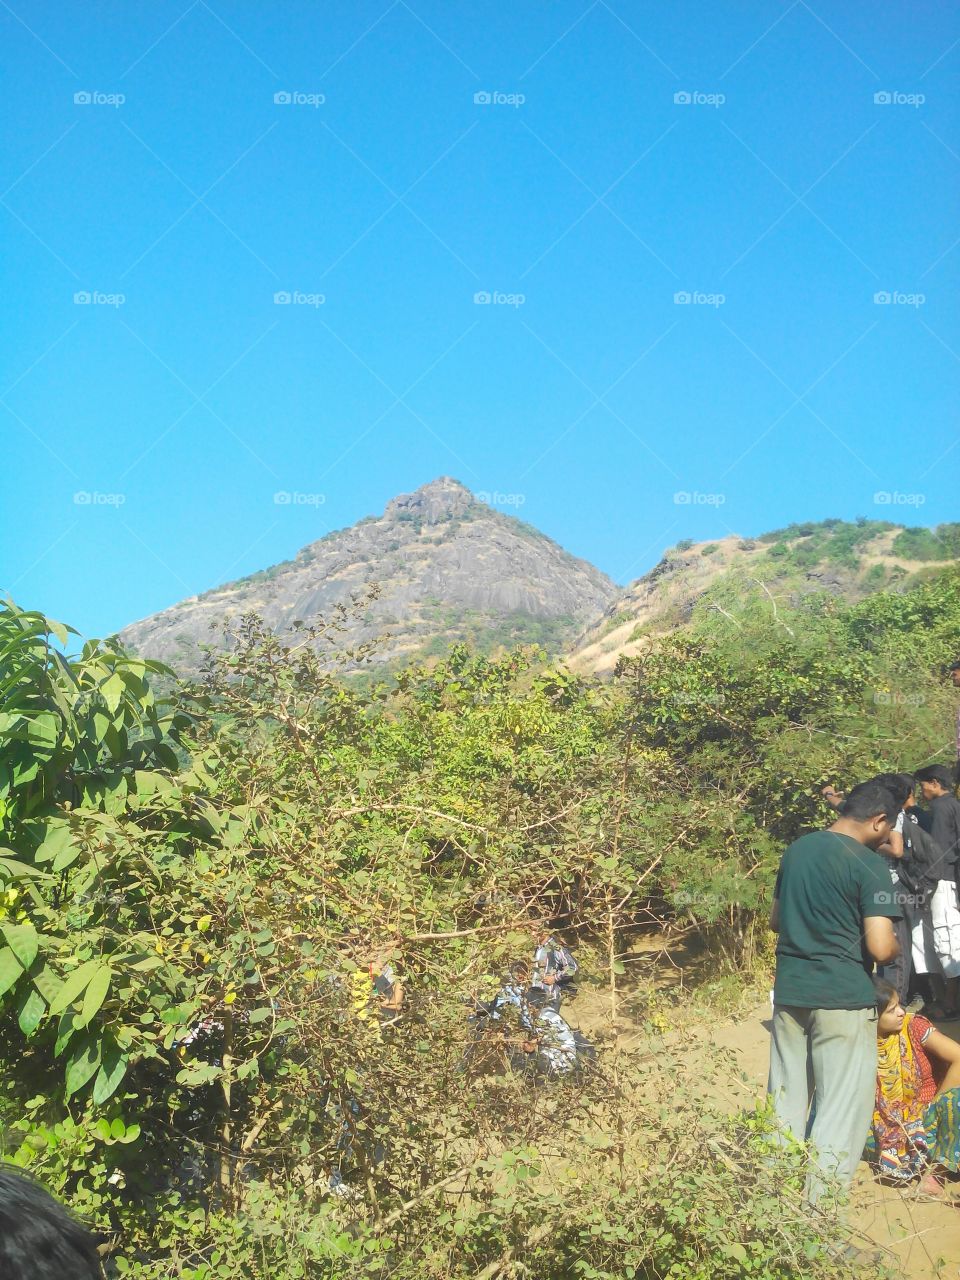 Mountain, Indian mountain, Gujarat mountain, girnaar mountain, girnaar Forest gujarat, india